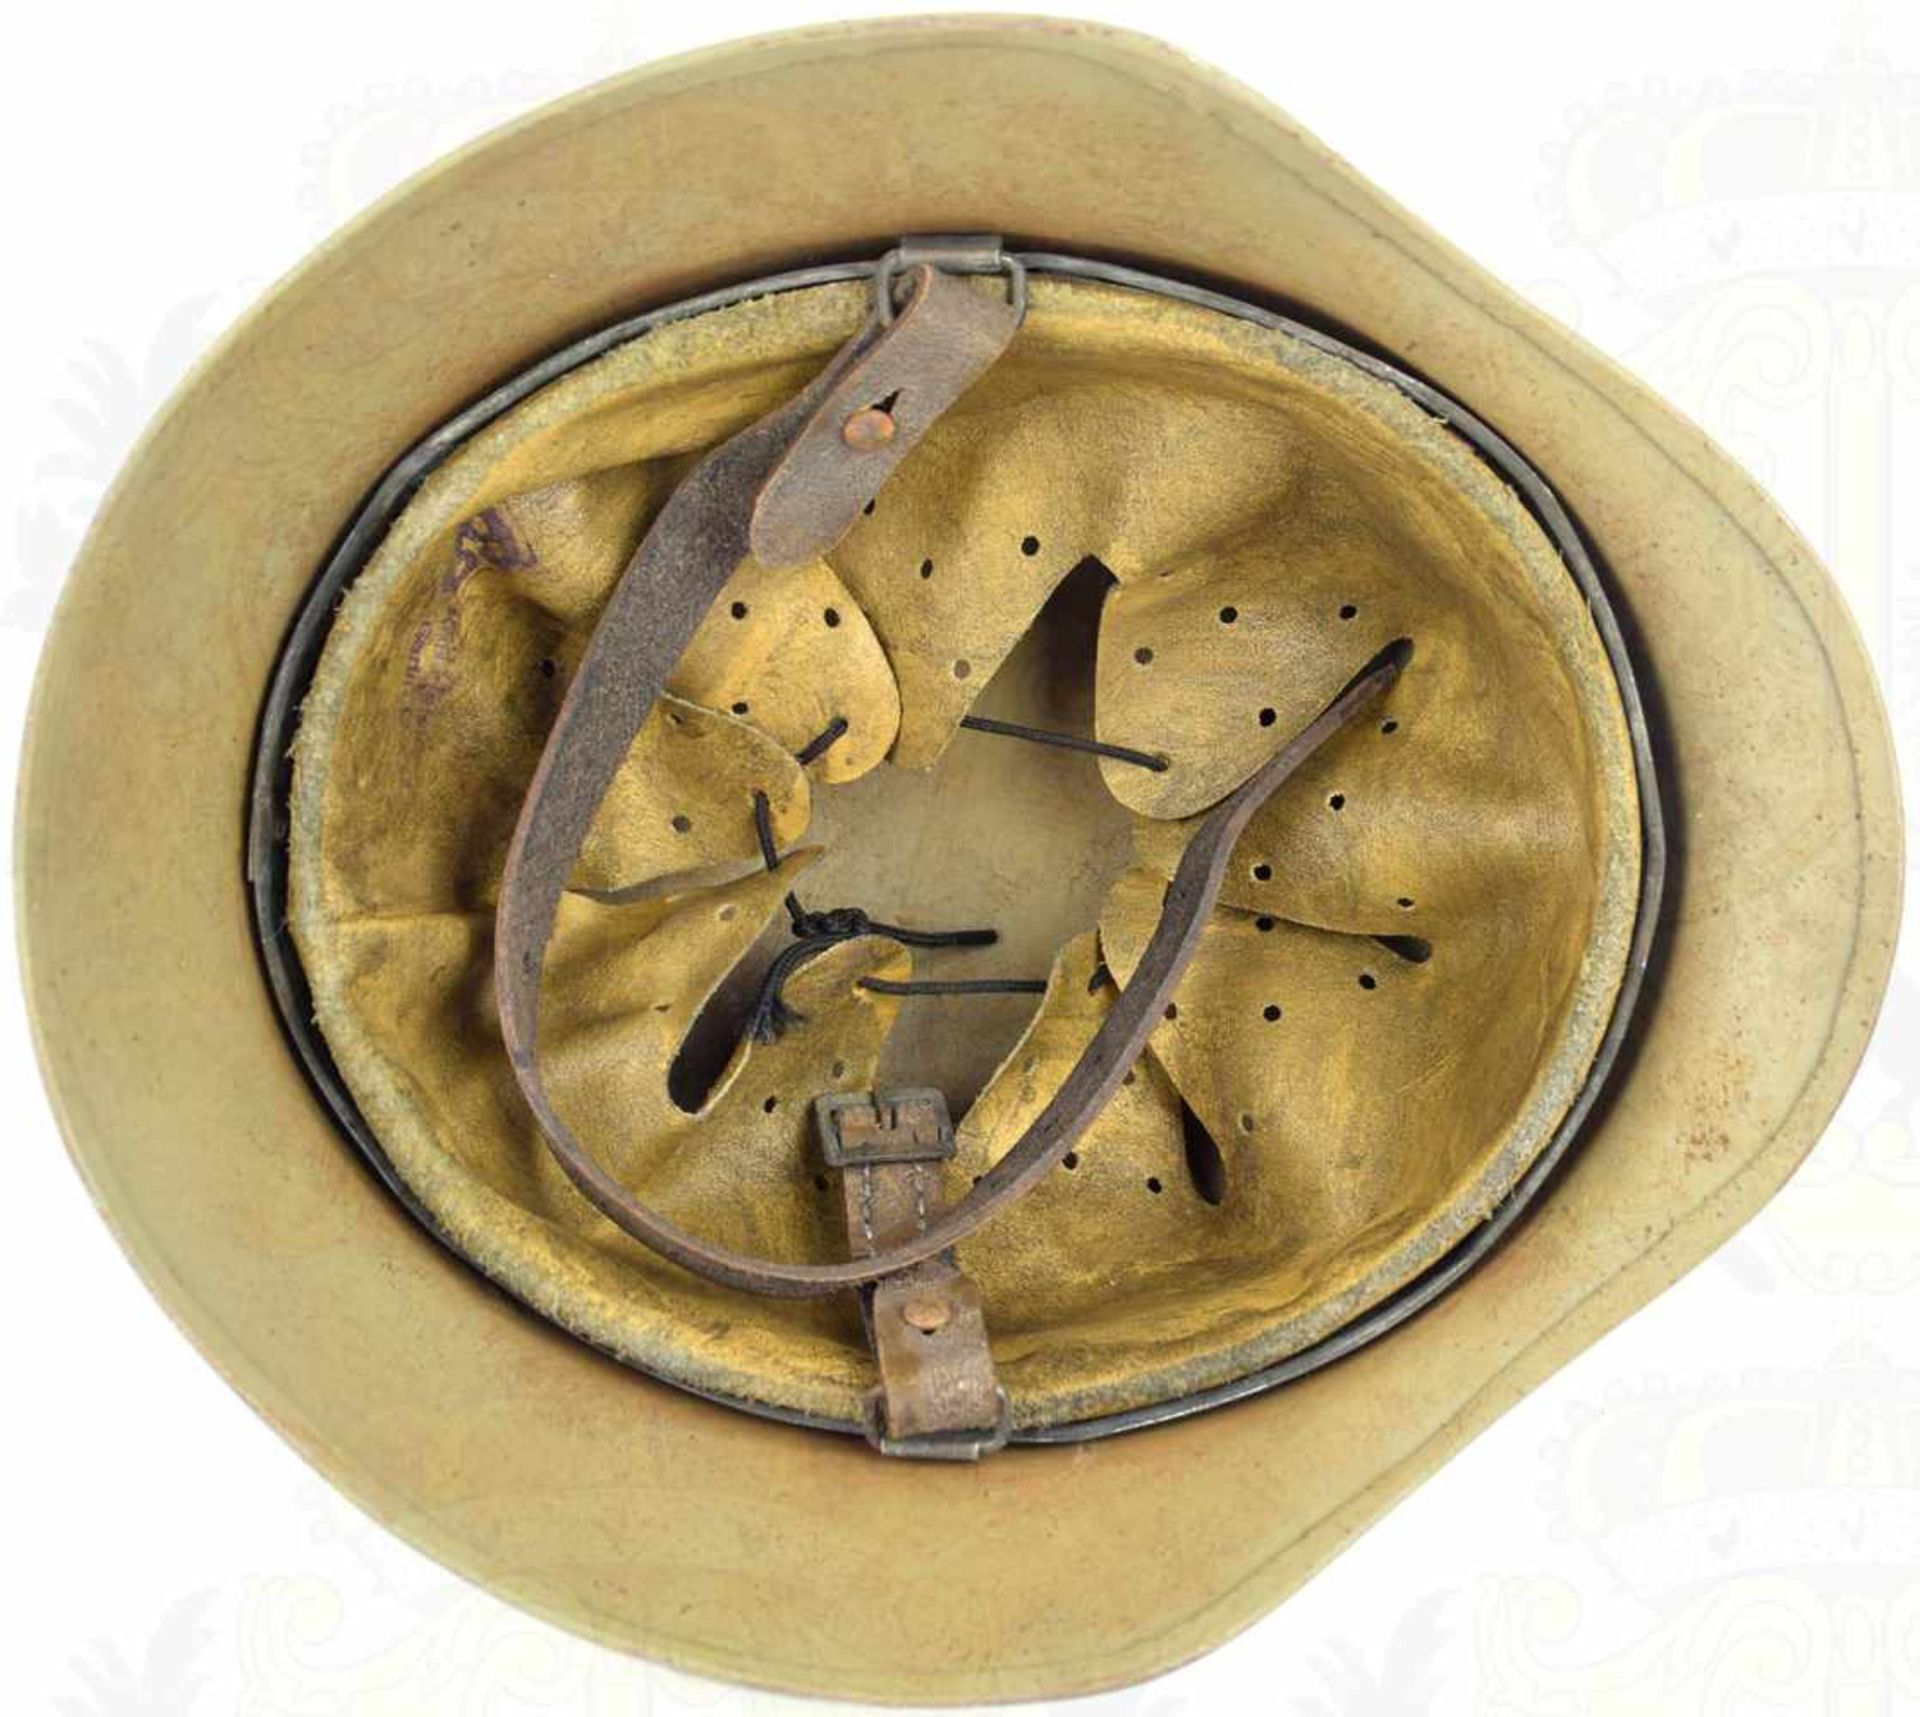 STAHLHELM 35/40, Sammleranfertigung, Glocke sandfarben lackiert, Afrikakorps- u. Wappen-Emblem, - Bild 4 aus 4